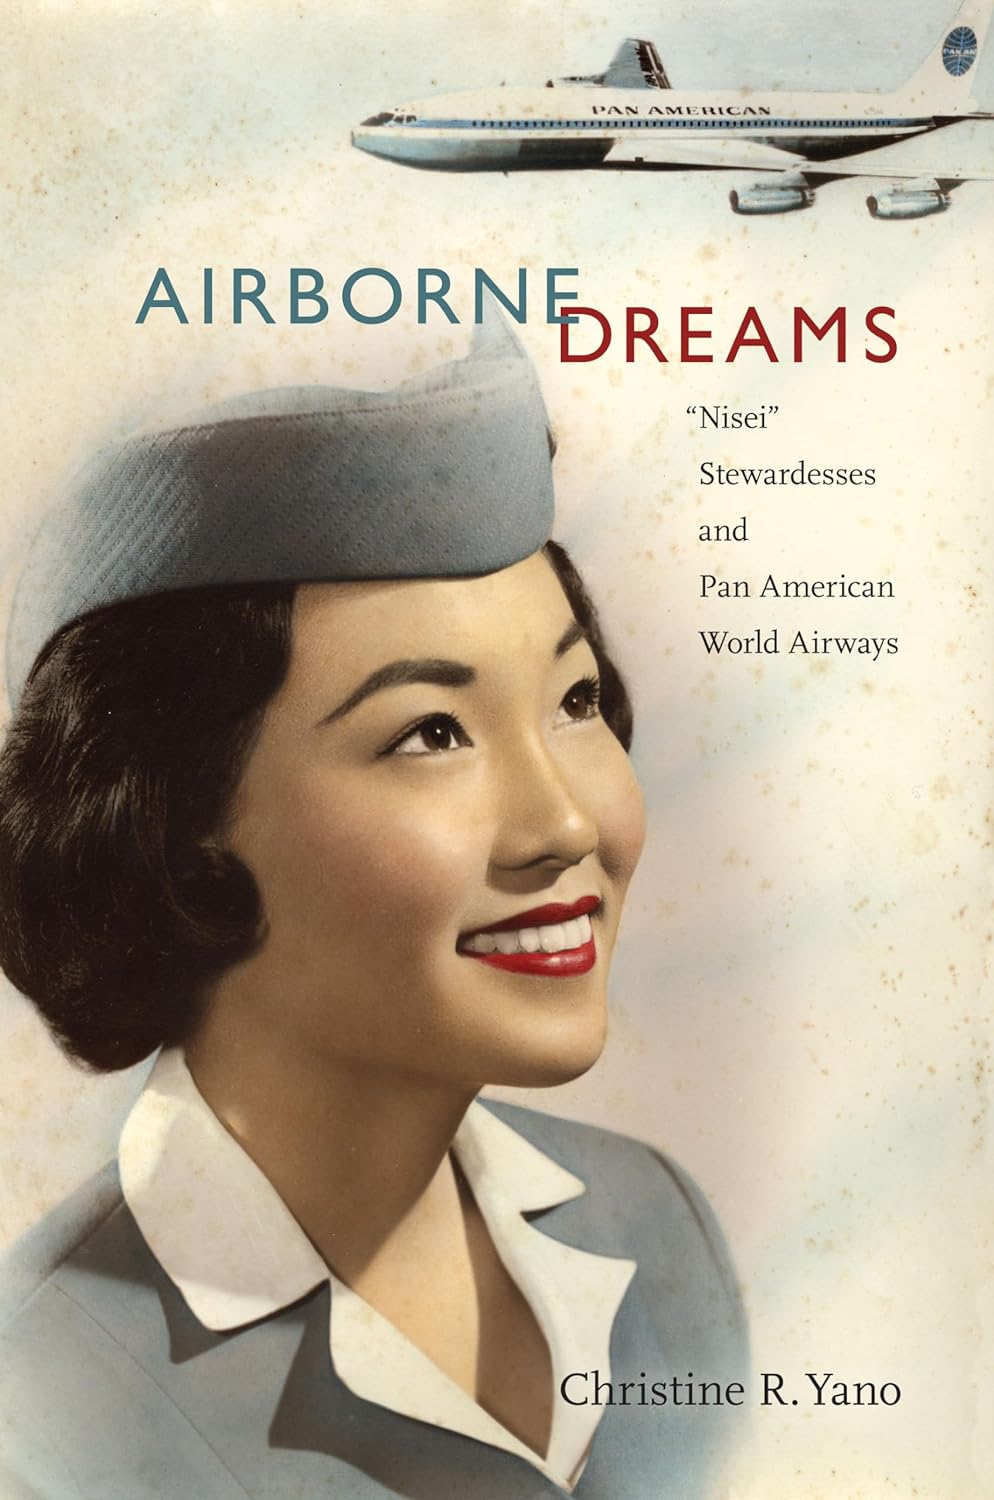 Airborne Dreams: “Nisei” Stewardesses and Pan American World Airways Paperback